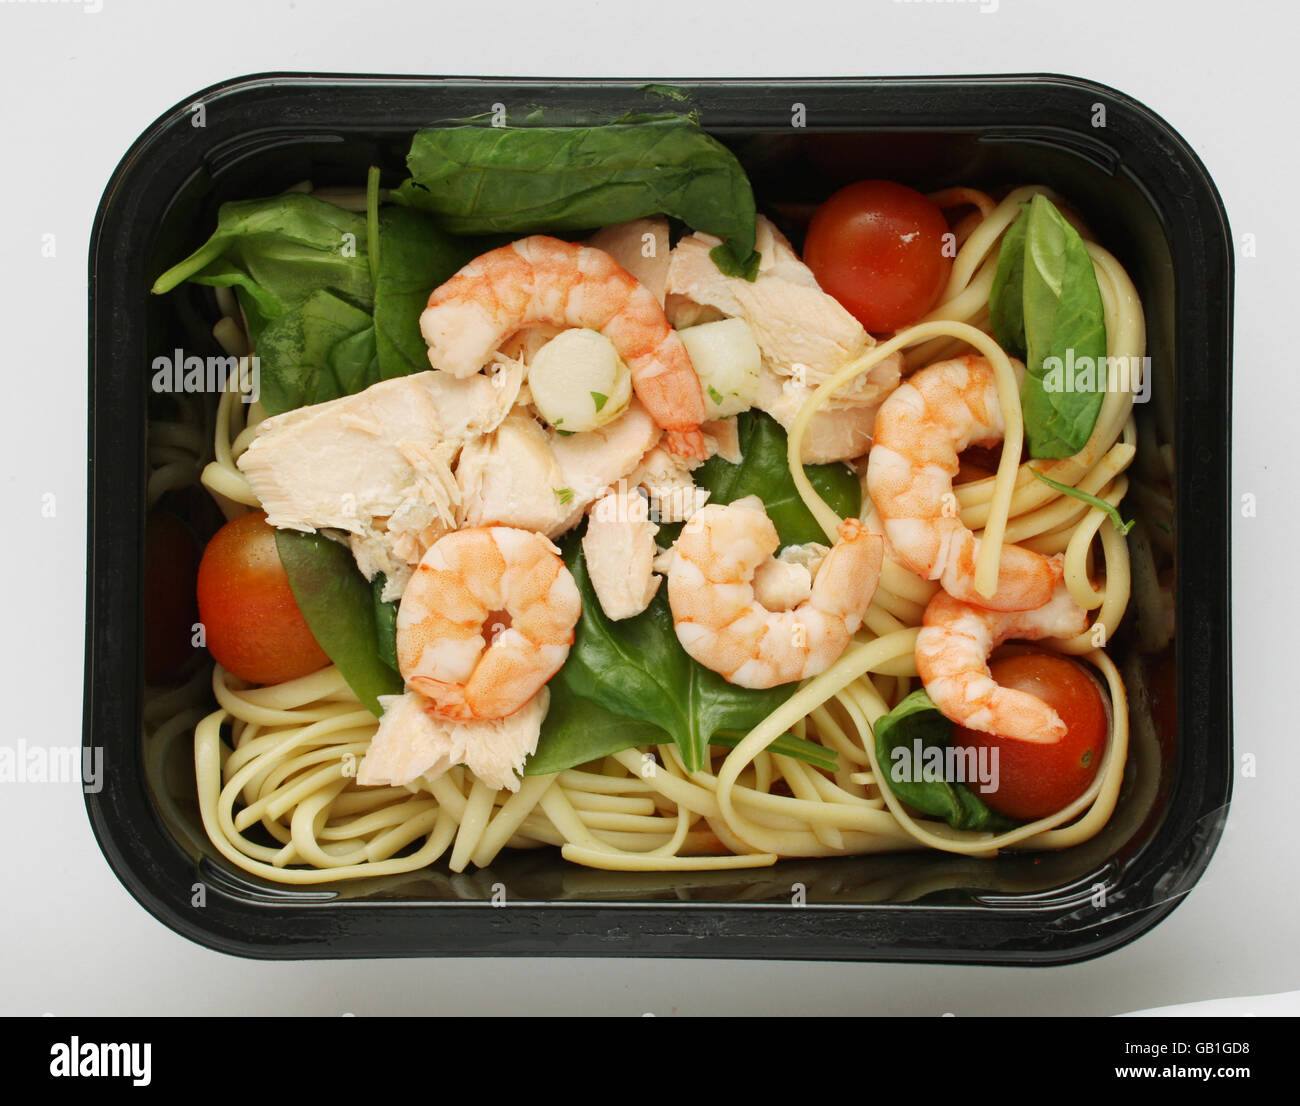 https://c8.alamy.com/comp/GB1GD8/ready-meals-seafood-linguine-a-marks-and-spencer-ready-meal-GB1GD8.jpg